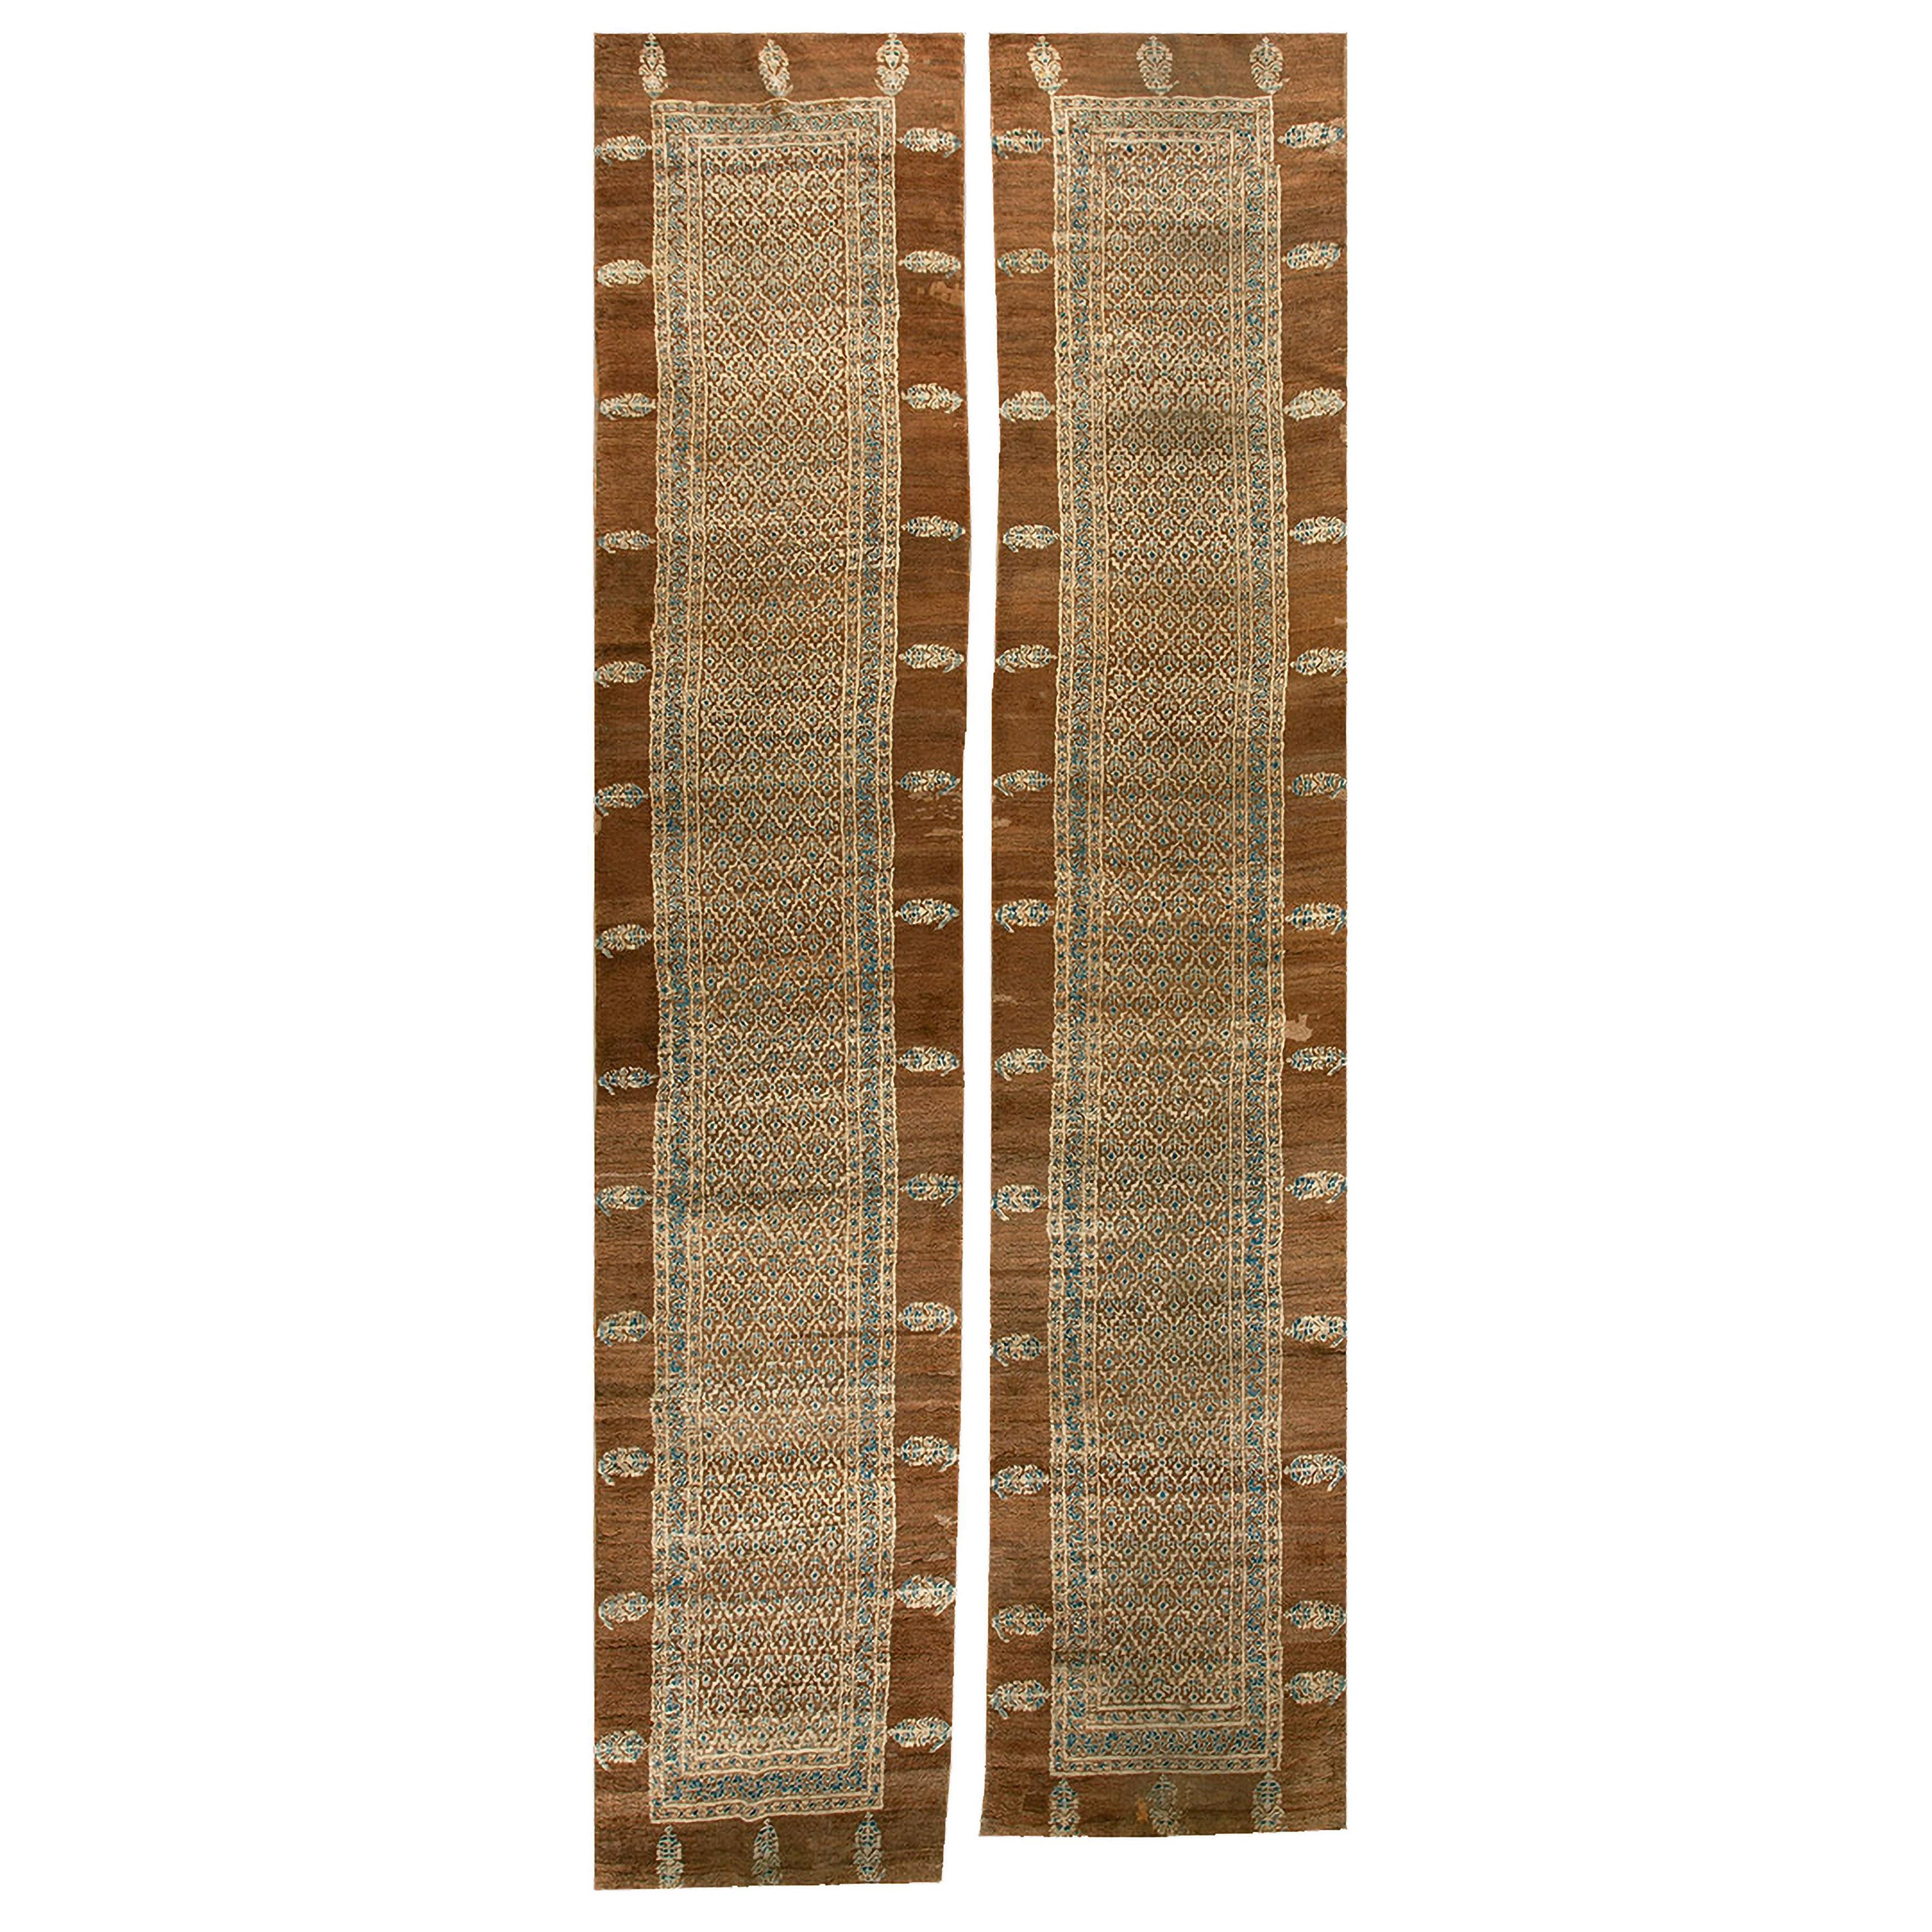 Mid 19th Century Pair of N.W. Persian Bakshaiesh Carpets (3' x 15'9" - 91 x 480) For Sale